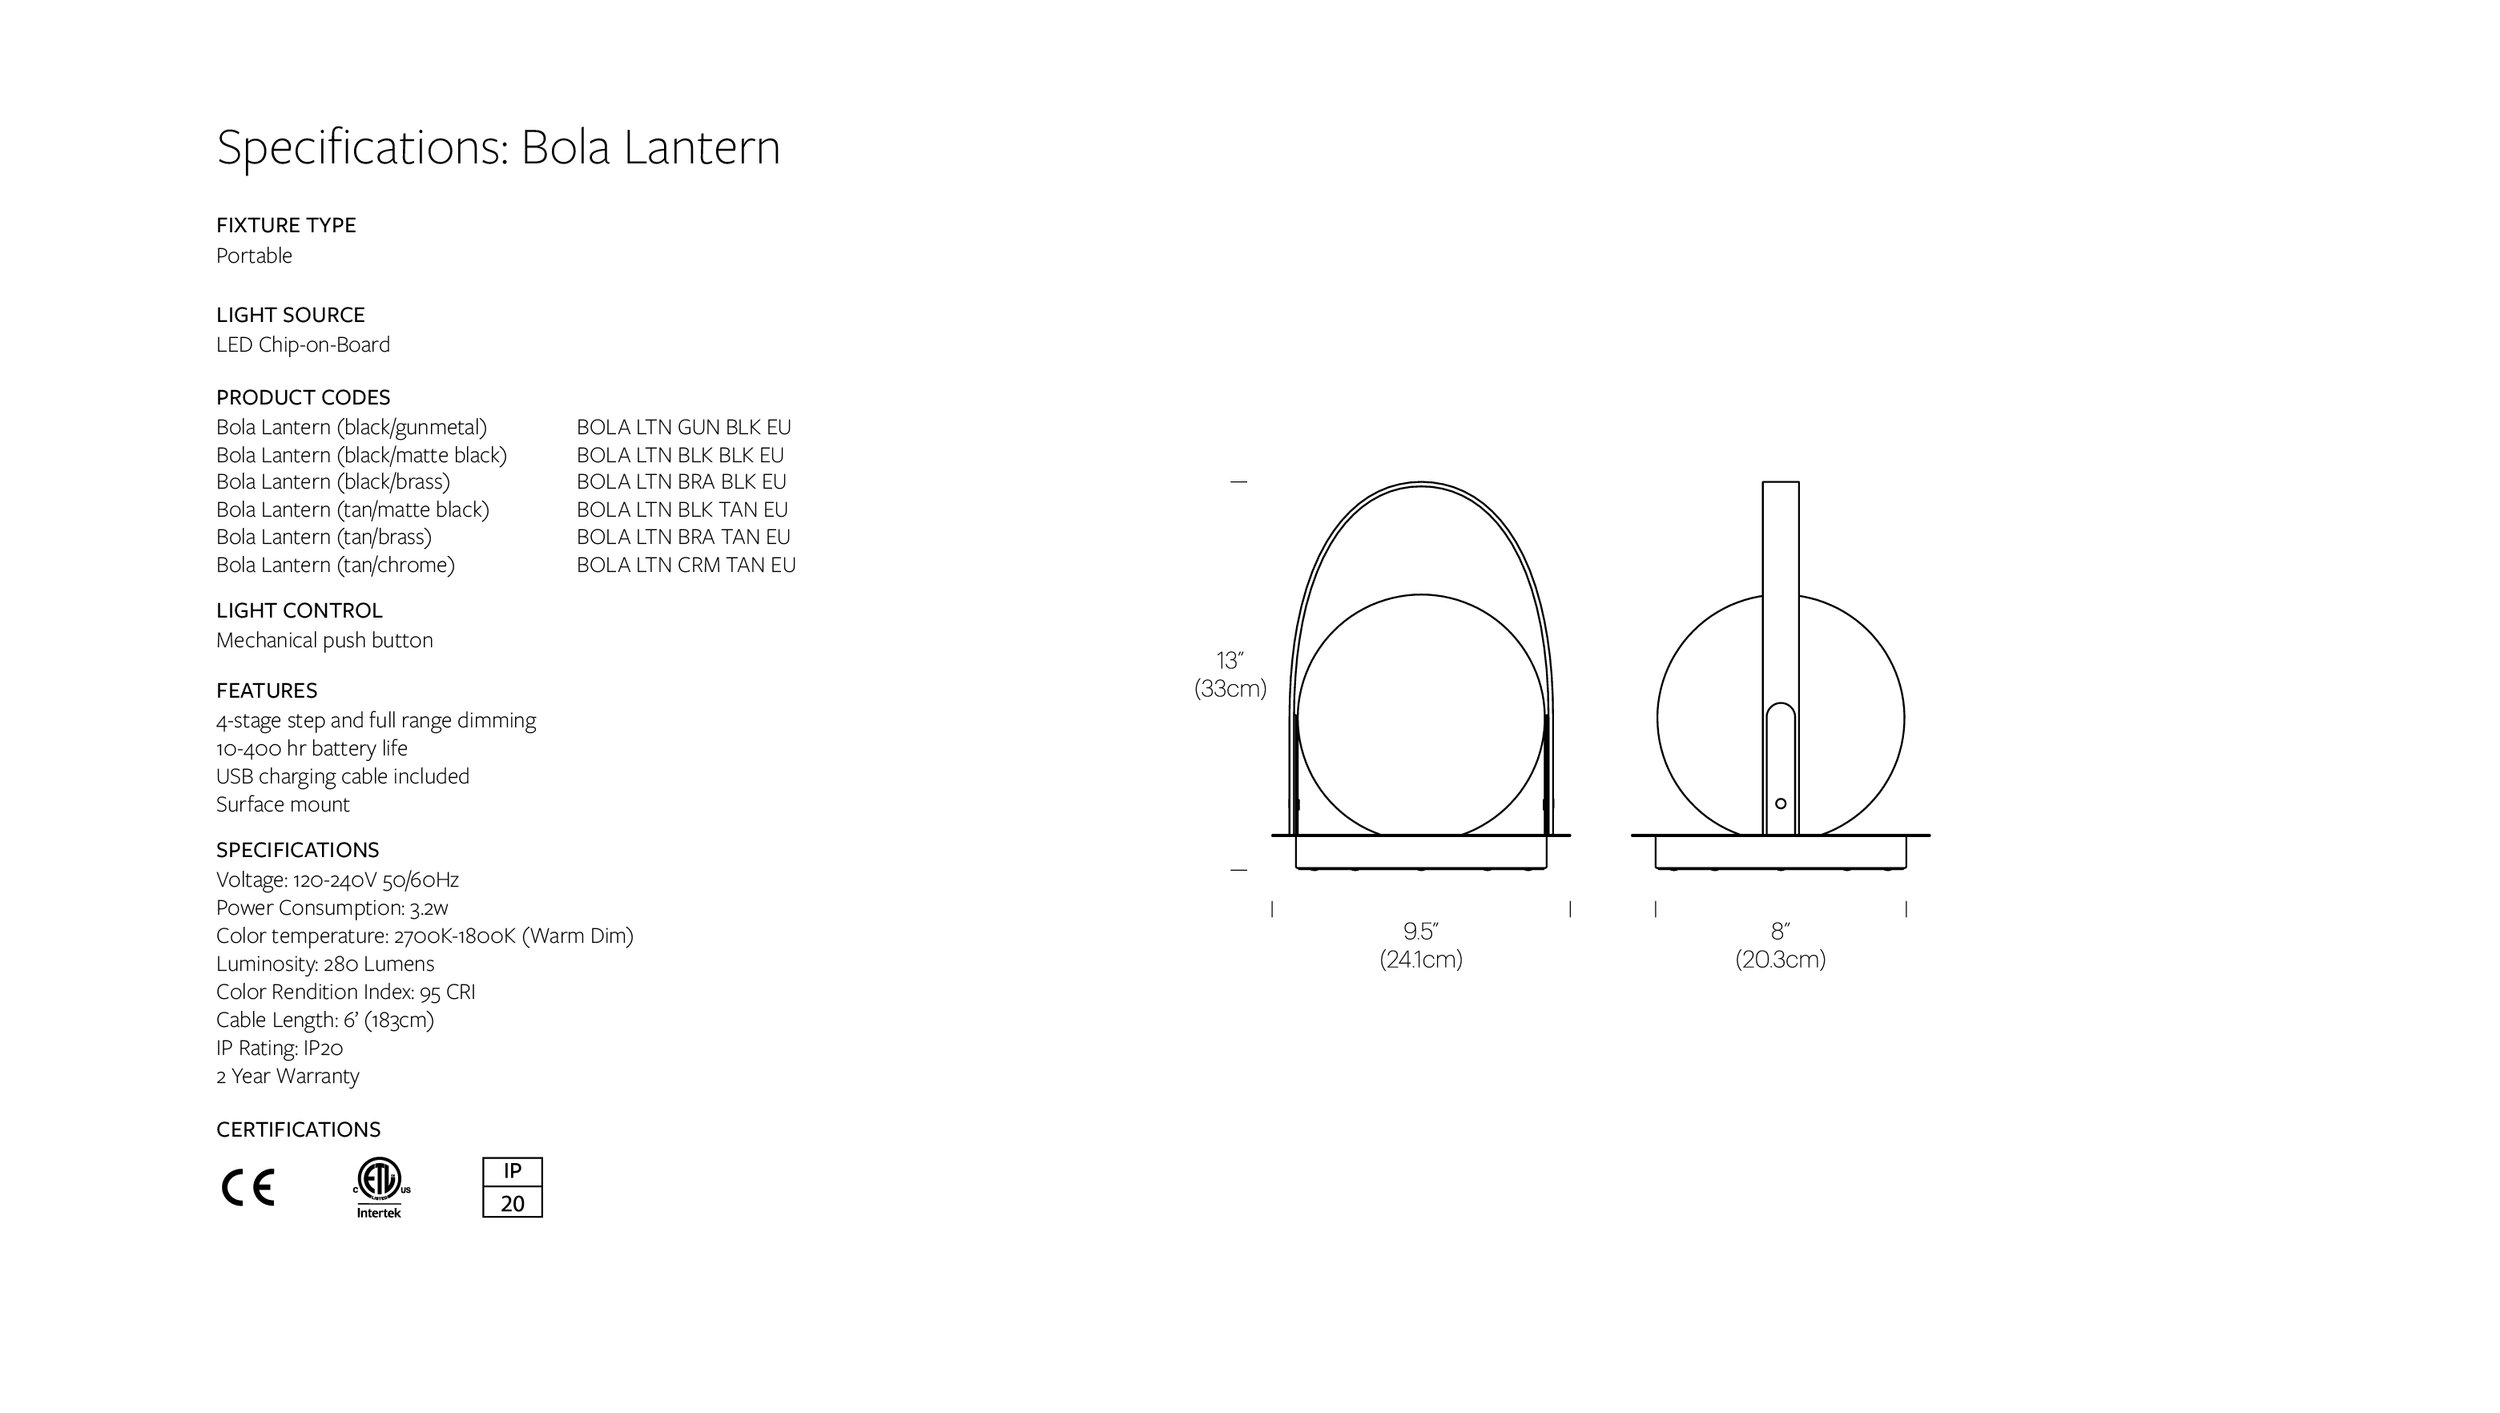 Pablo+Designs+Bola Lantern+EU+Spec+Sheet 022322-02.jpg